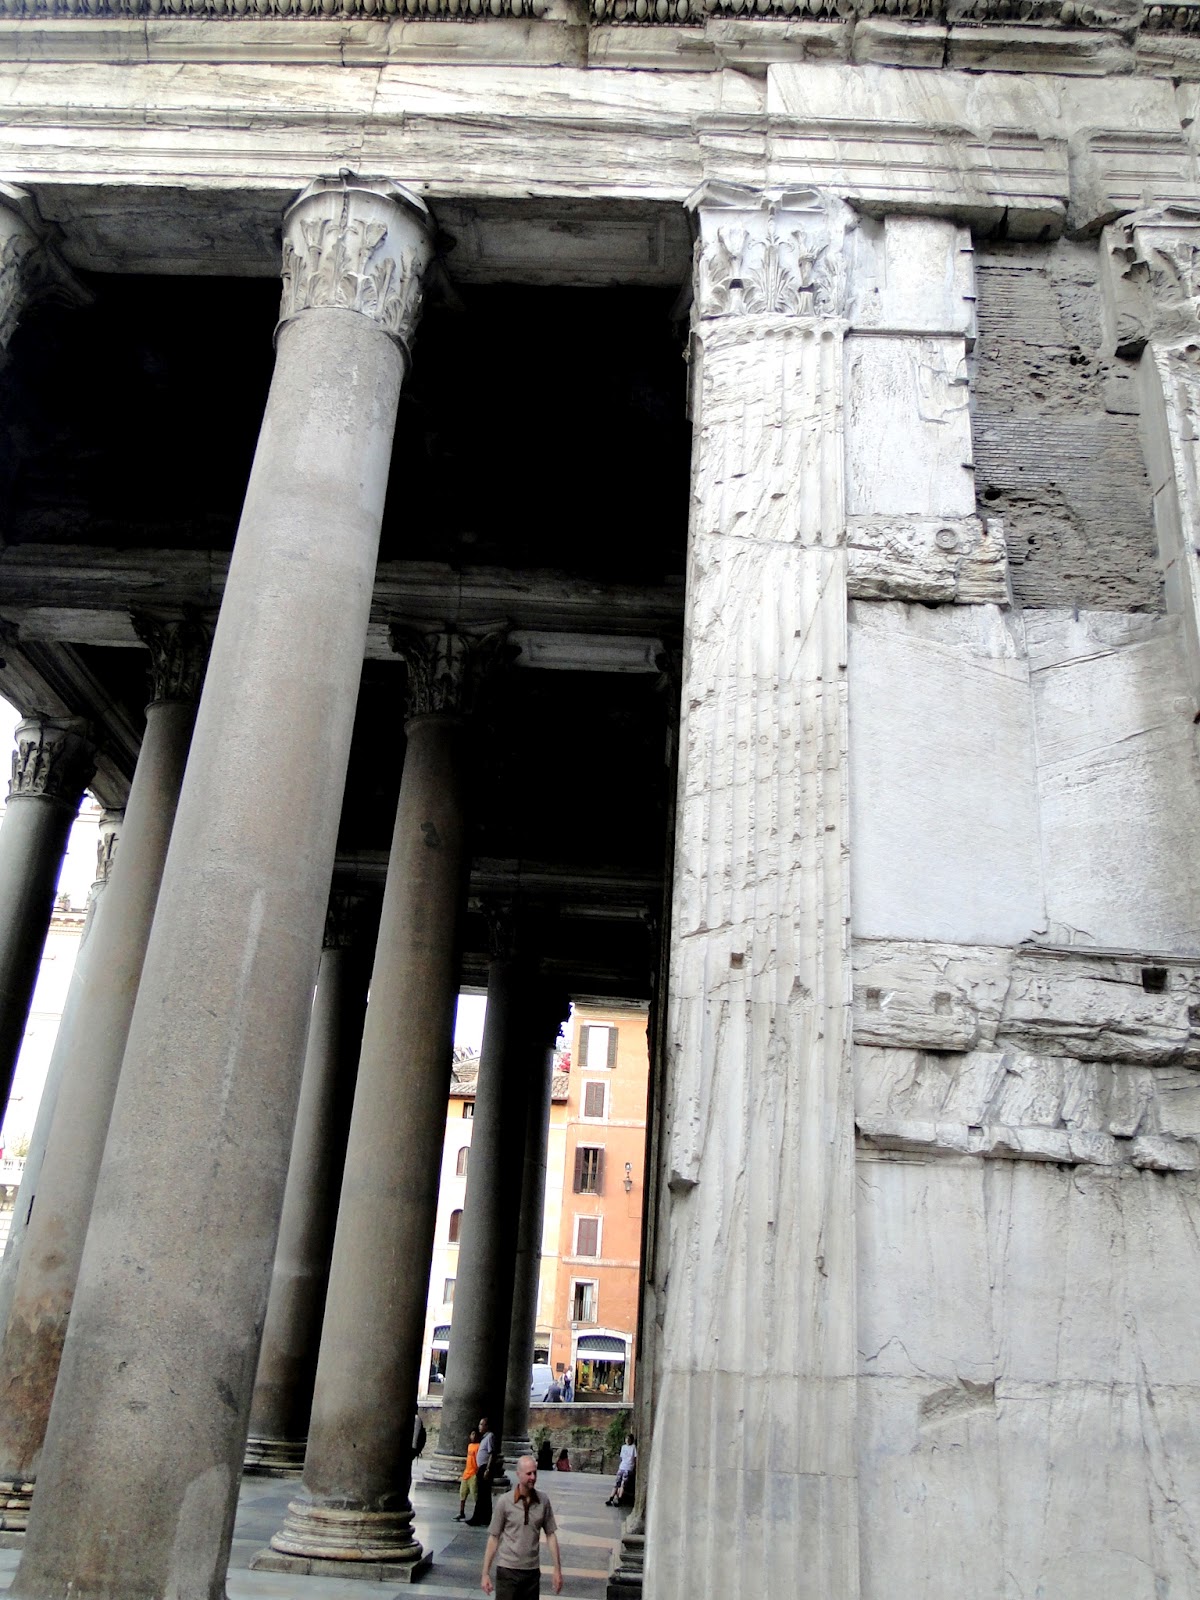 Italy Day 7: Pantheon